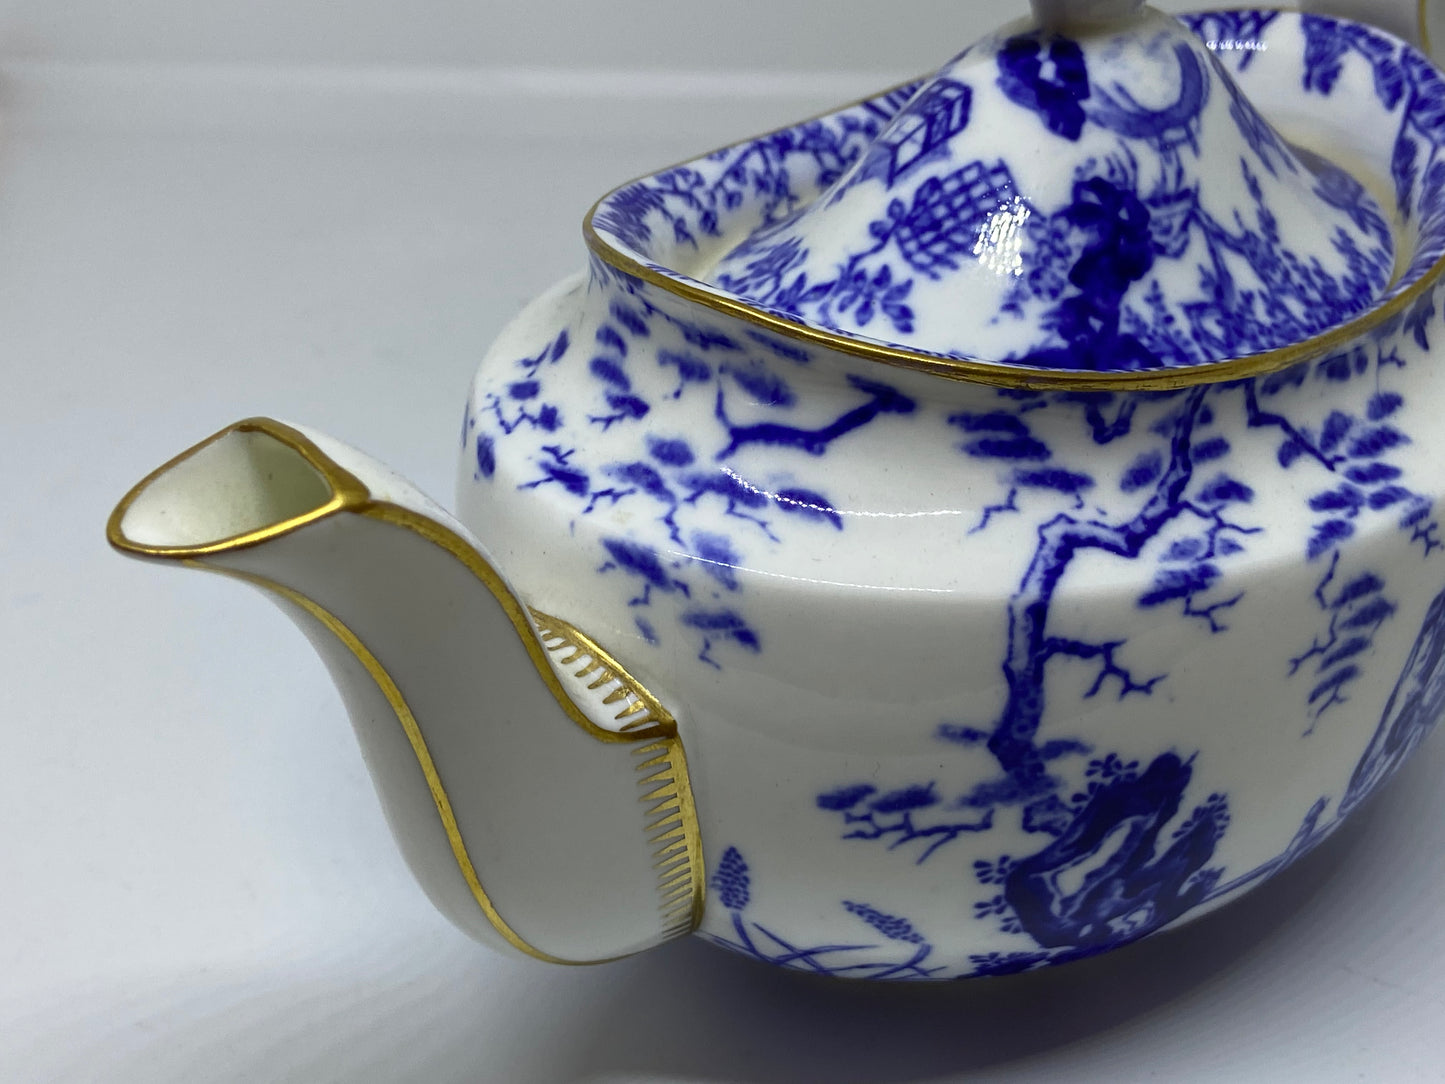 Antique Royal Crown Derby Mikado Teapot 1930